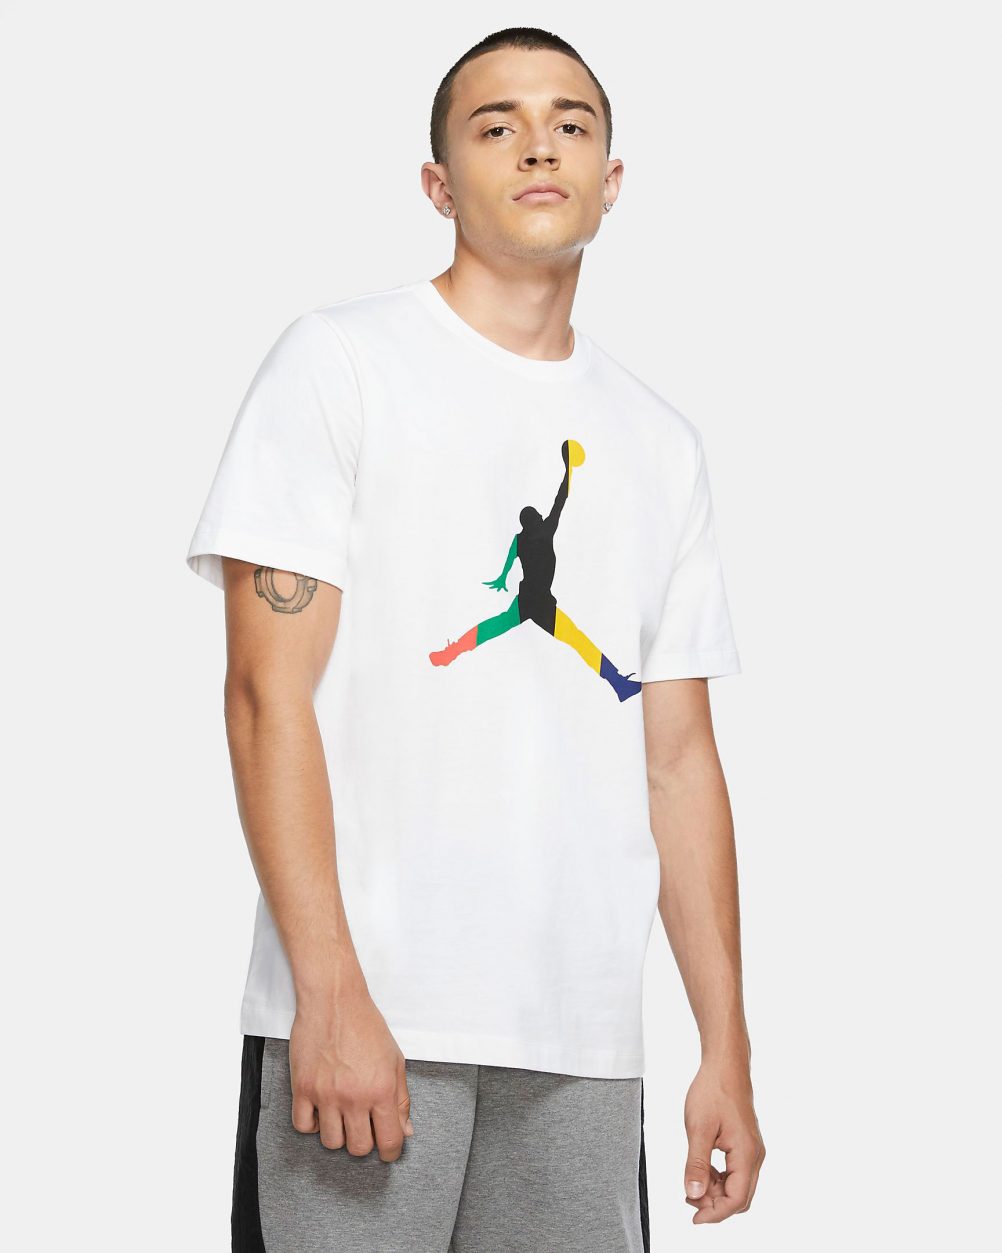 J Balvin Air Jordan 1 Shirts and Outfits | SneakerFits.com